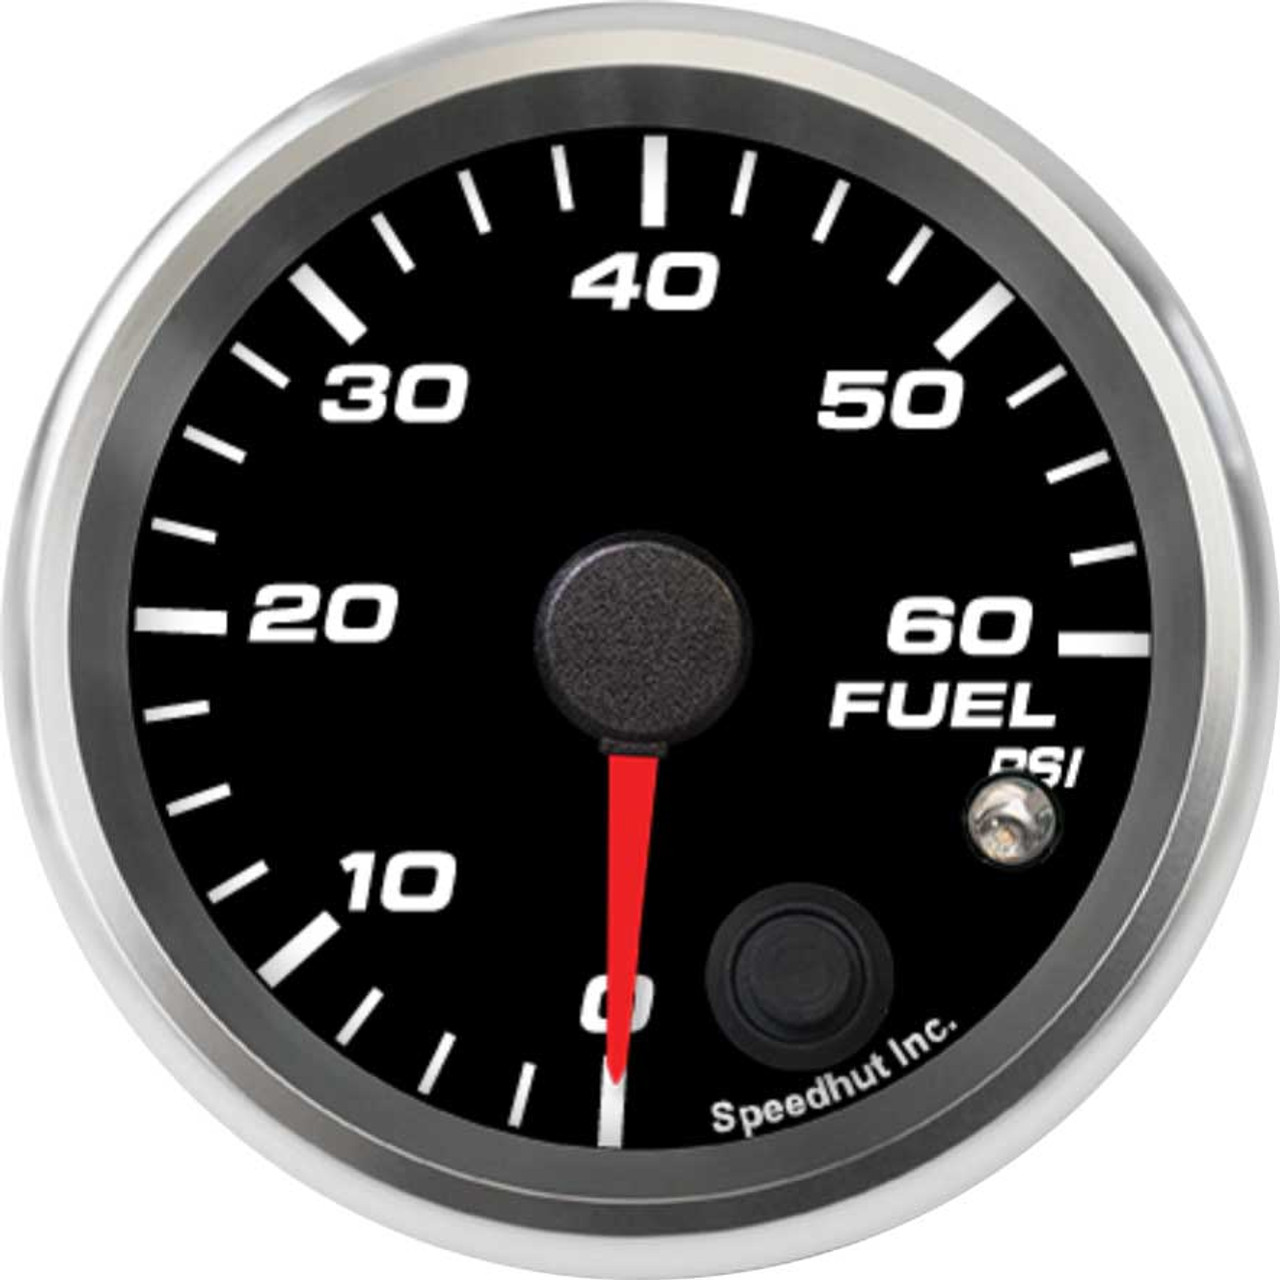 2-5/8" Fuel Pressure Gauge 0-60 psi (w/ warning)